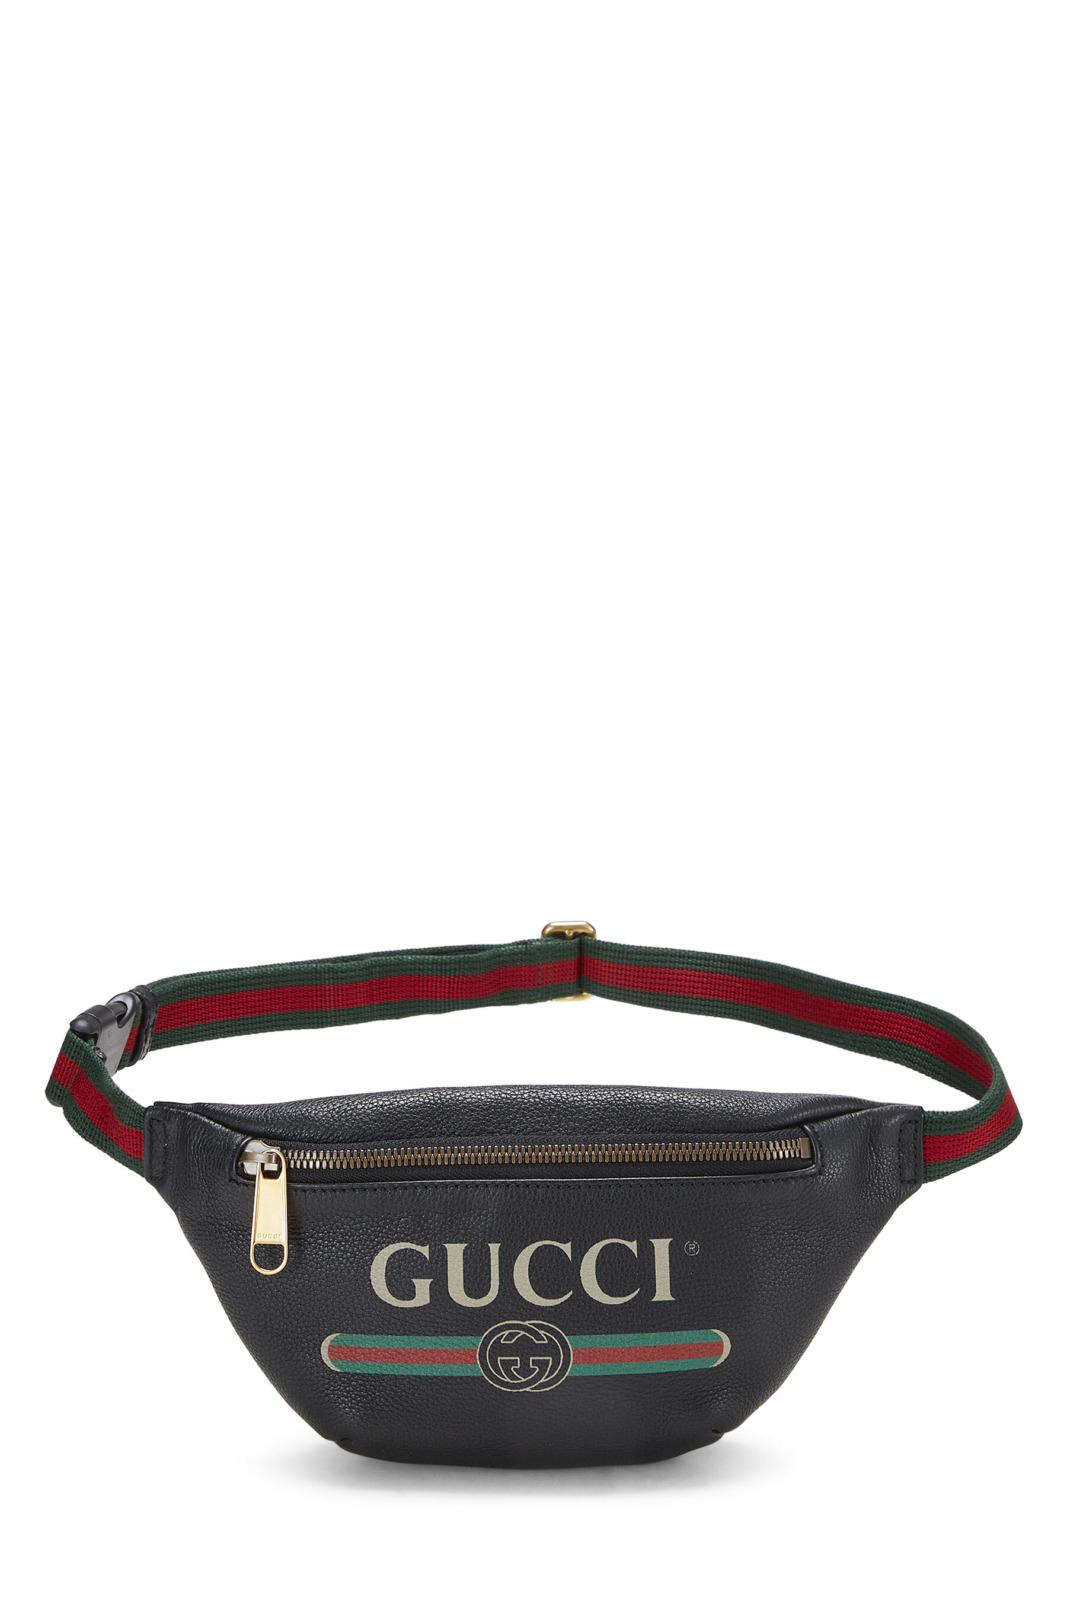 Gucci Womens Belt Bag Black - WGACA GOOFASH